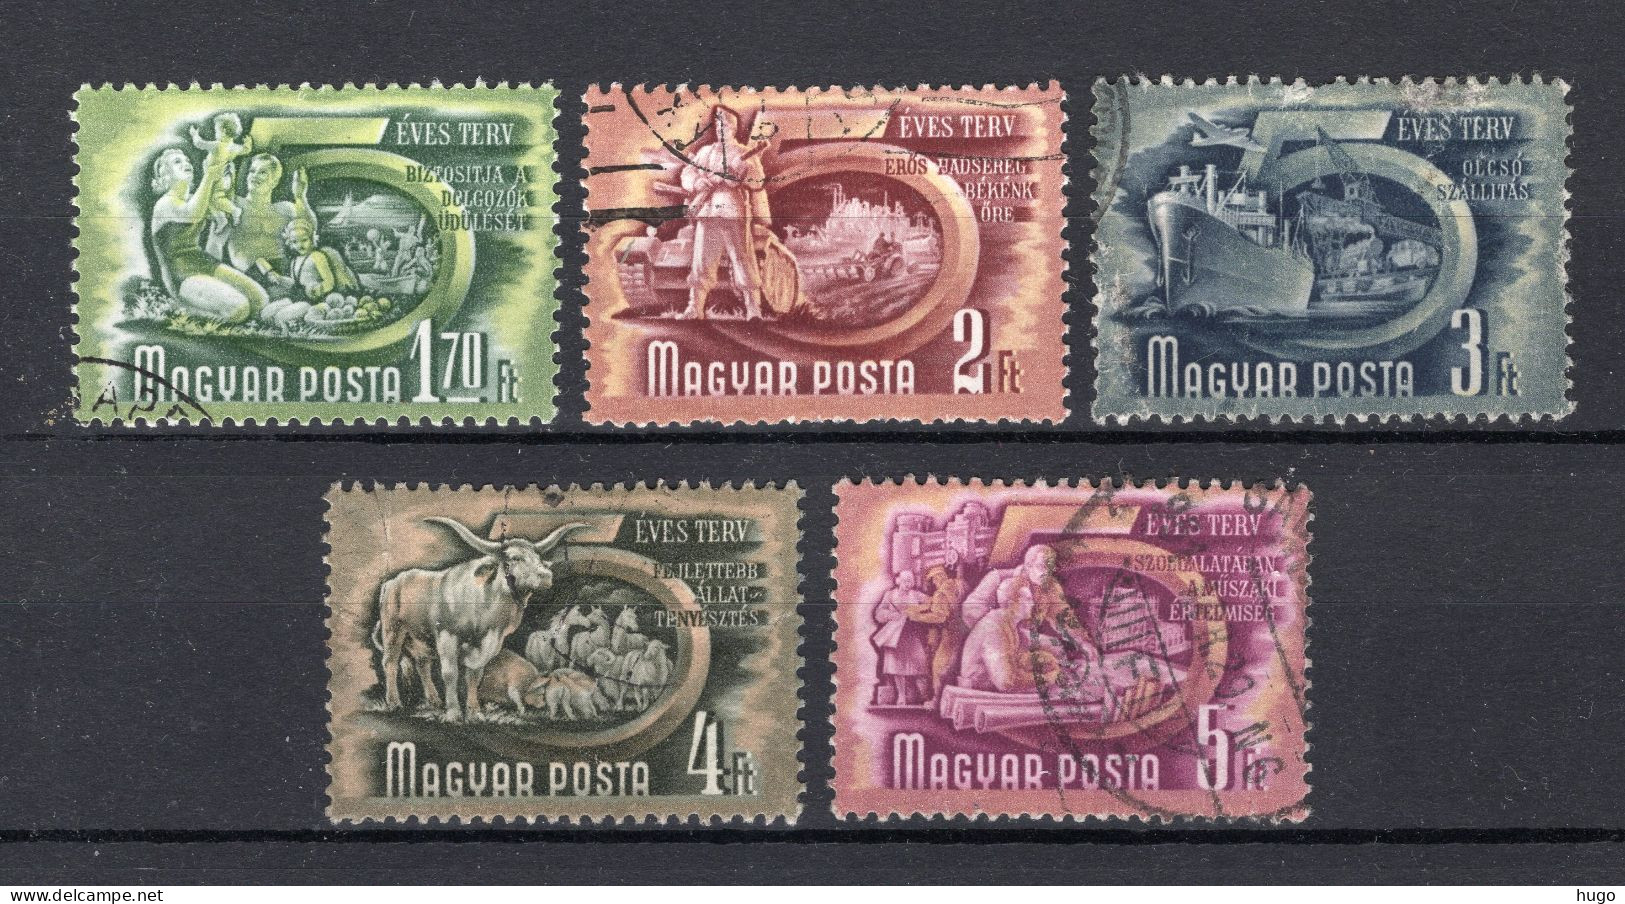 HONGARIJE Yt. 935/939° Gestempeld 1950 - Used Stamps